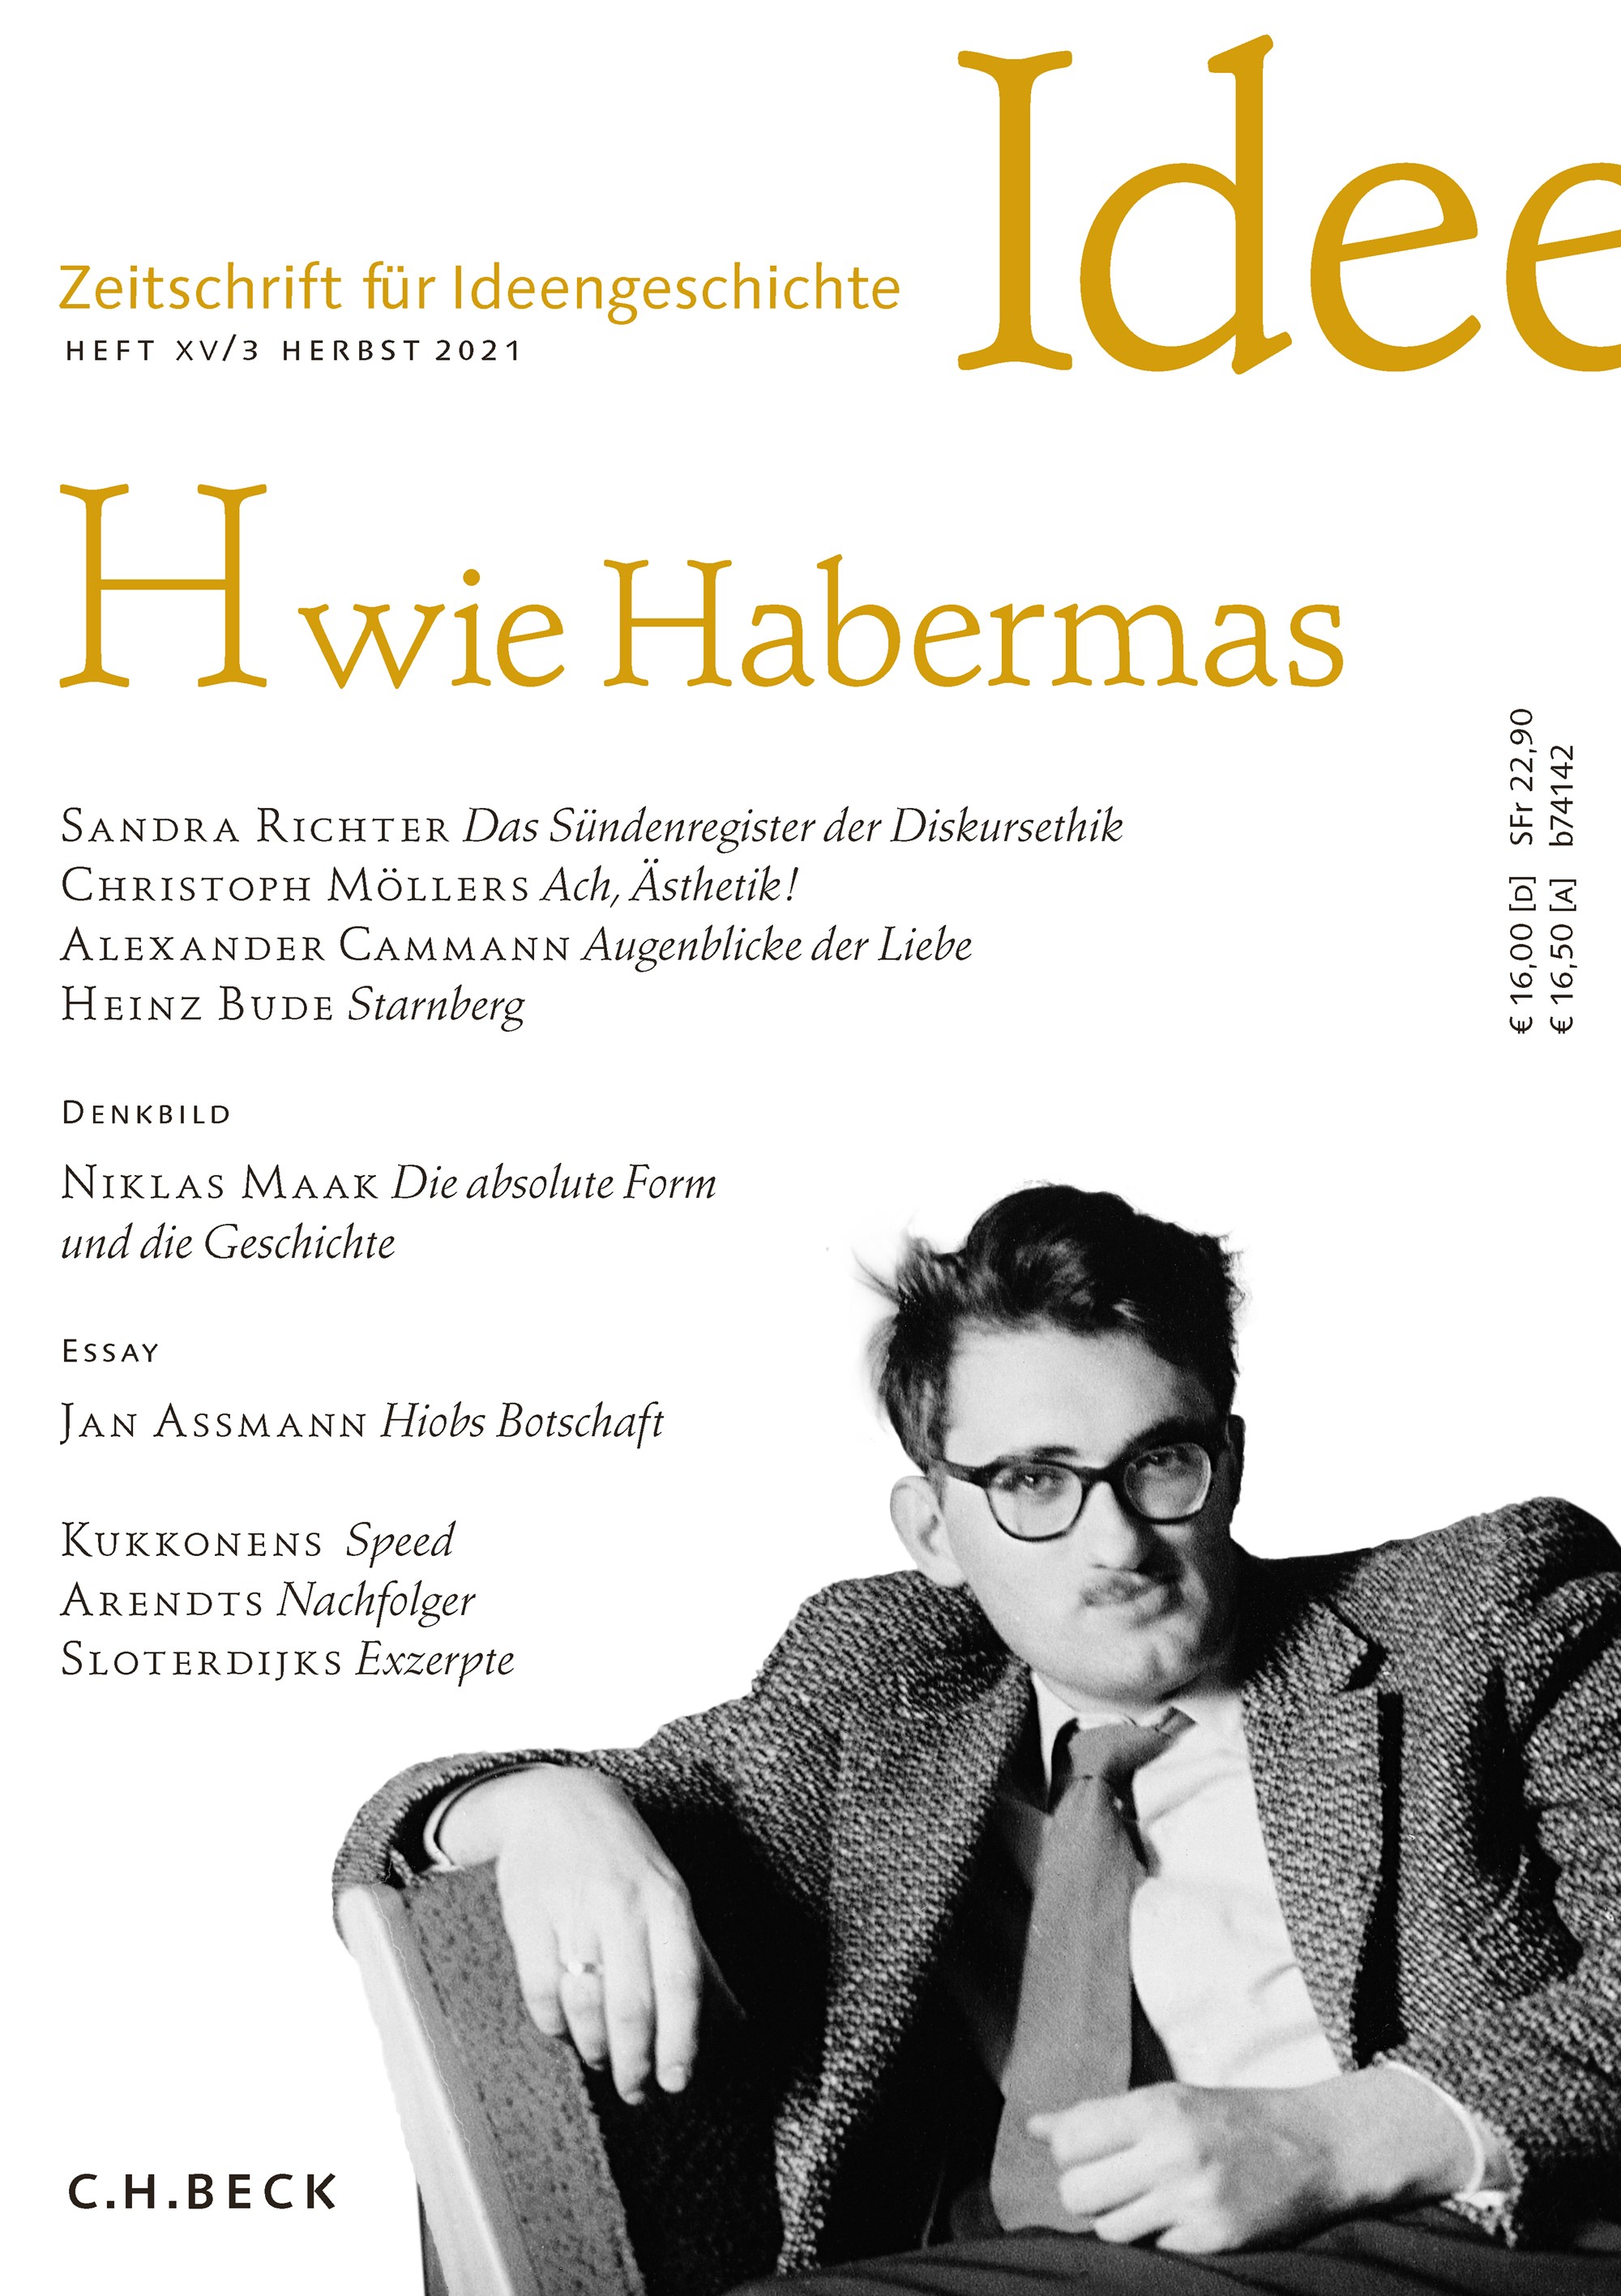 Cover von Heft XV/3 Herbst 2021